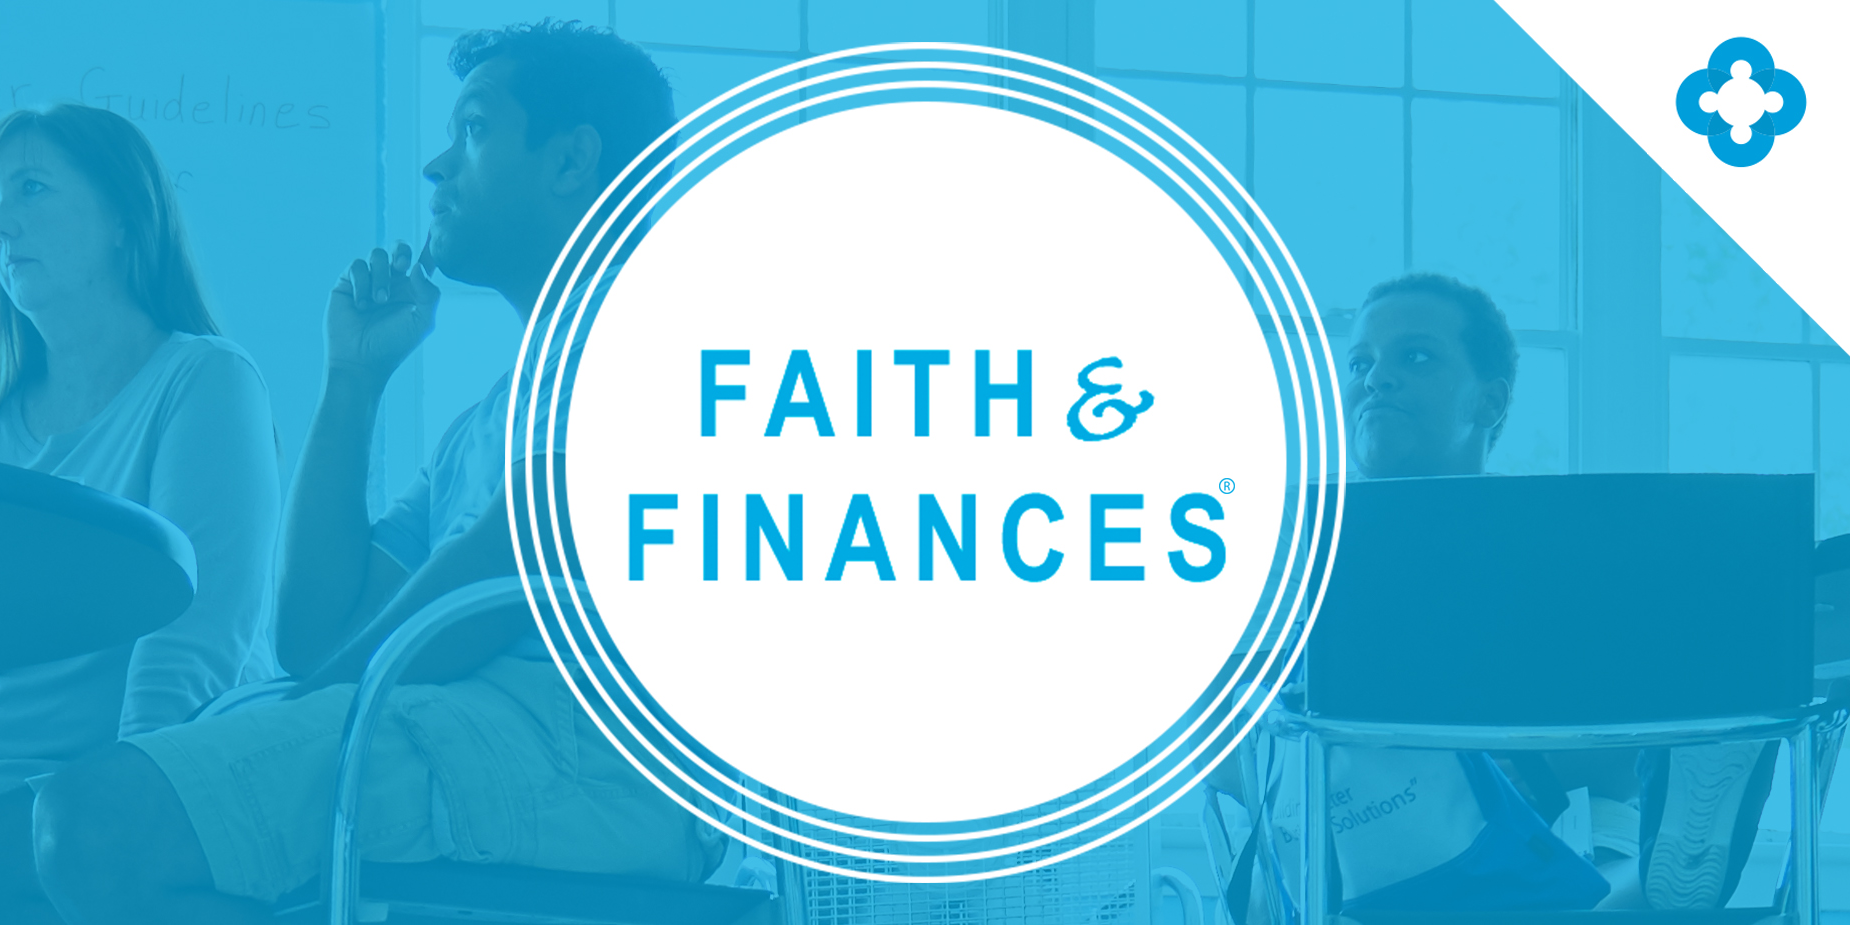 Faith & Finances - 2020 Fresno Training